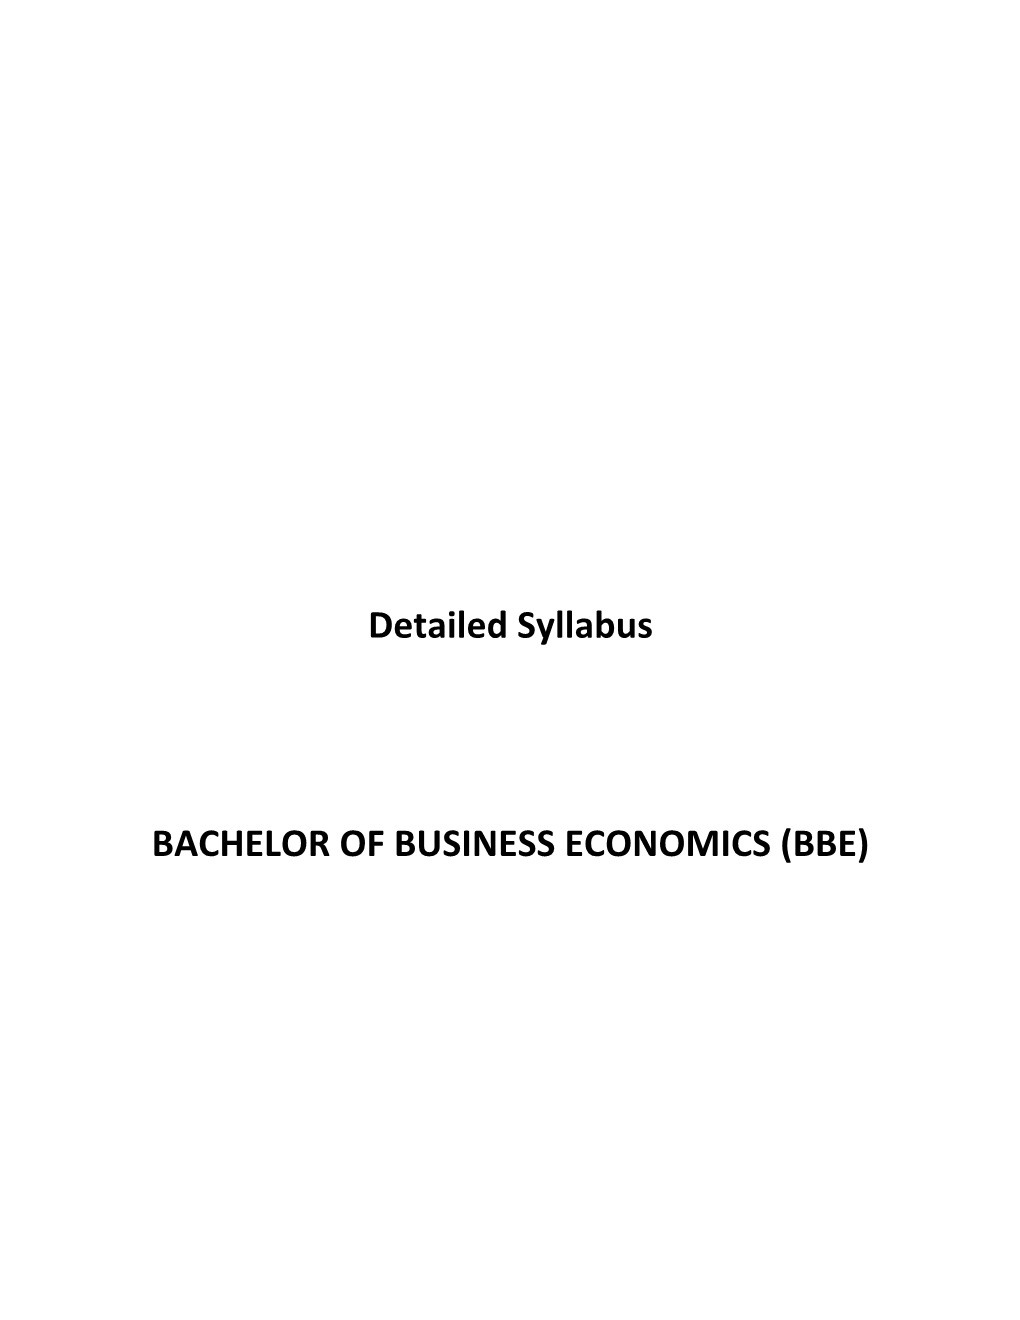 Bachelor of Business Economics (Bbe)